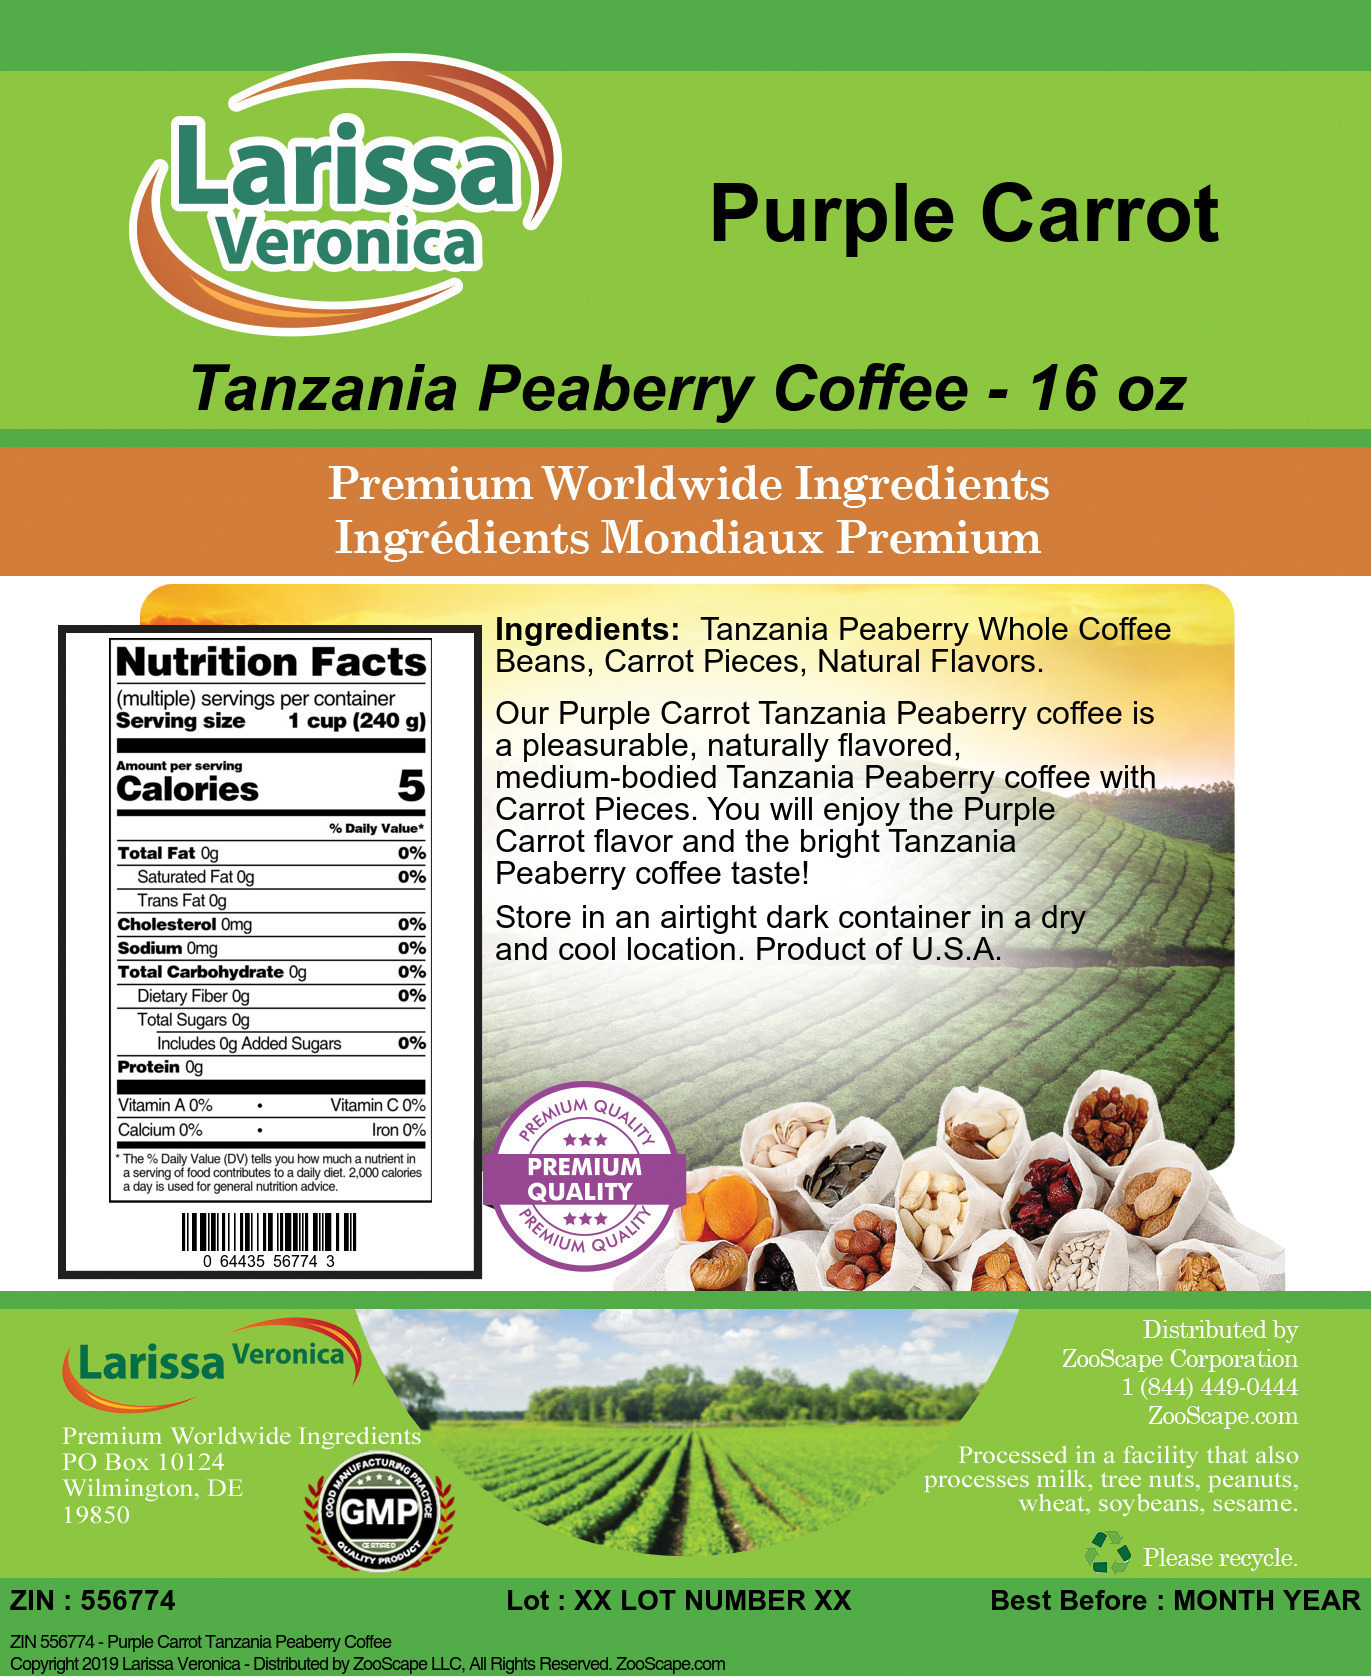 Purple Carrot Tanzania Peaberry Coffee - Label